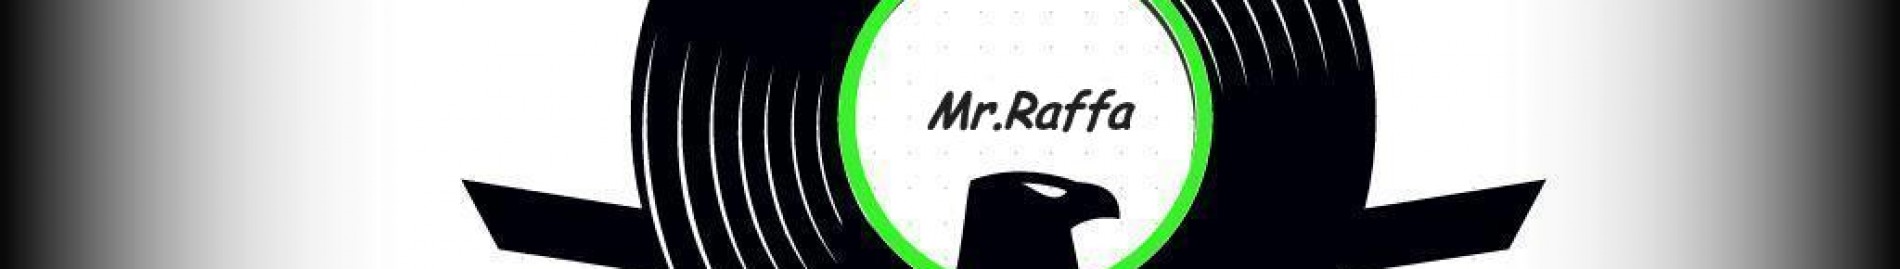 Mr.Raffa